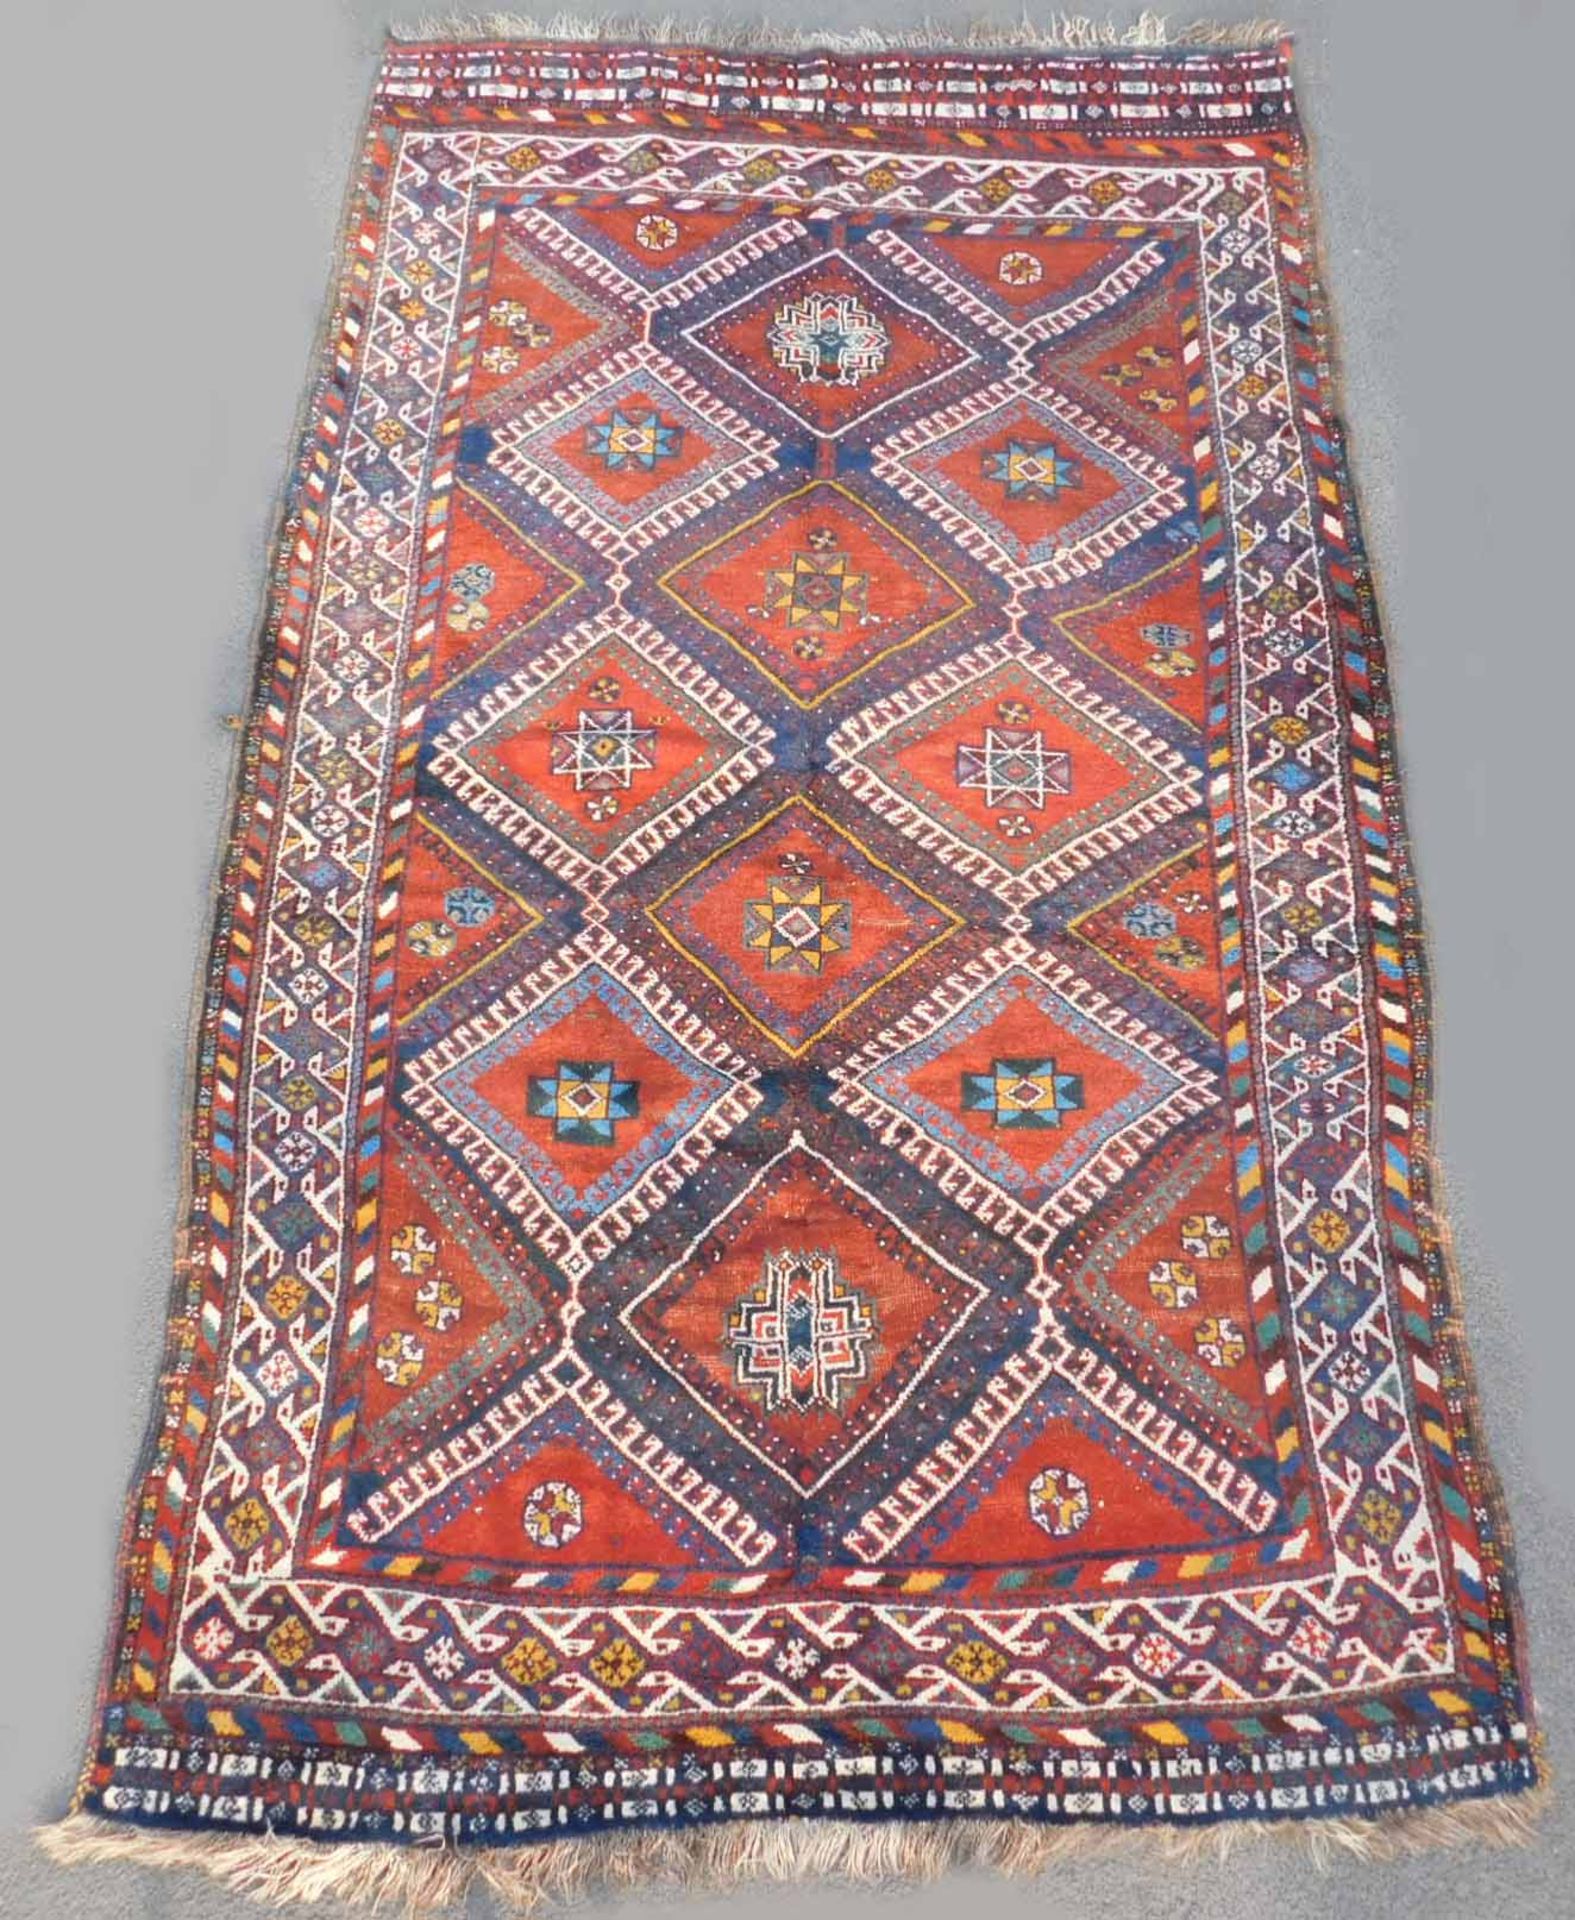 Neiriz Persian carpet. Iran. Around 100 - 140 years old.